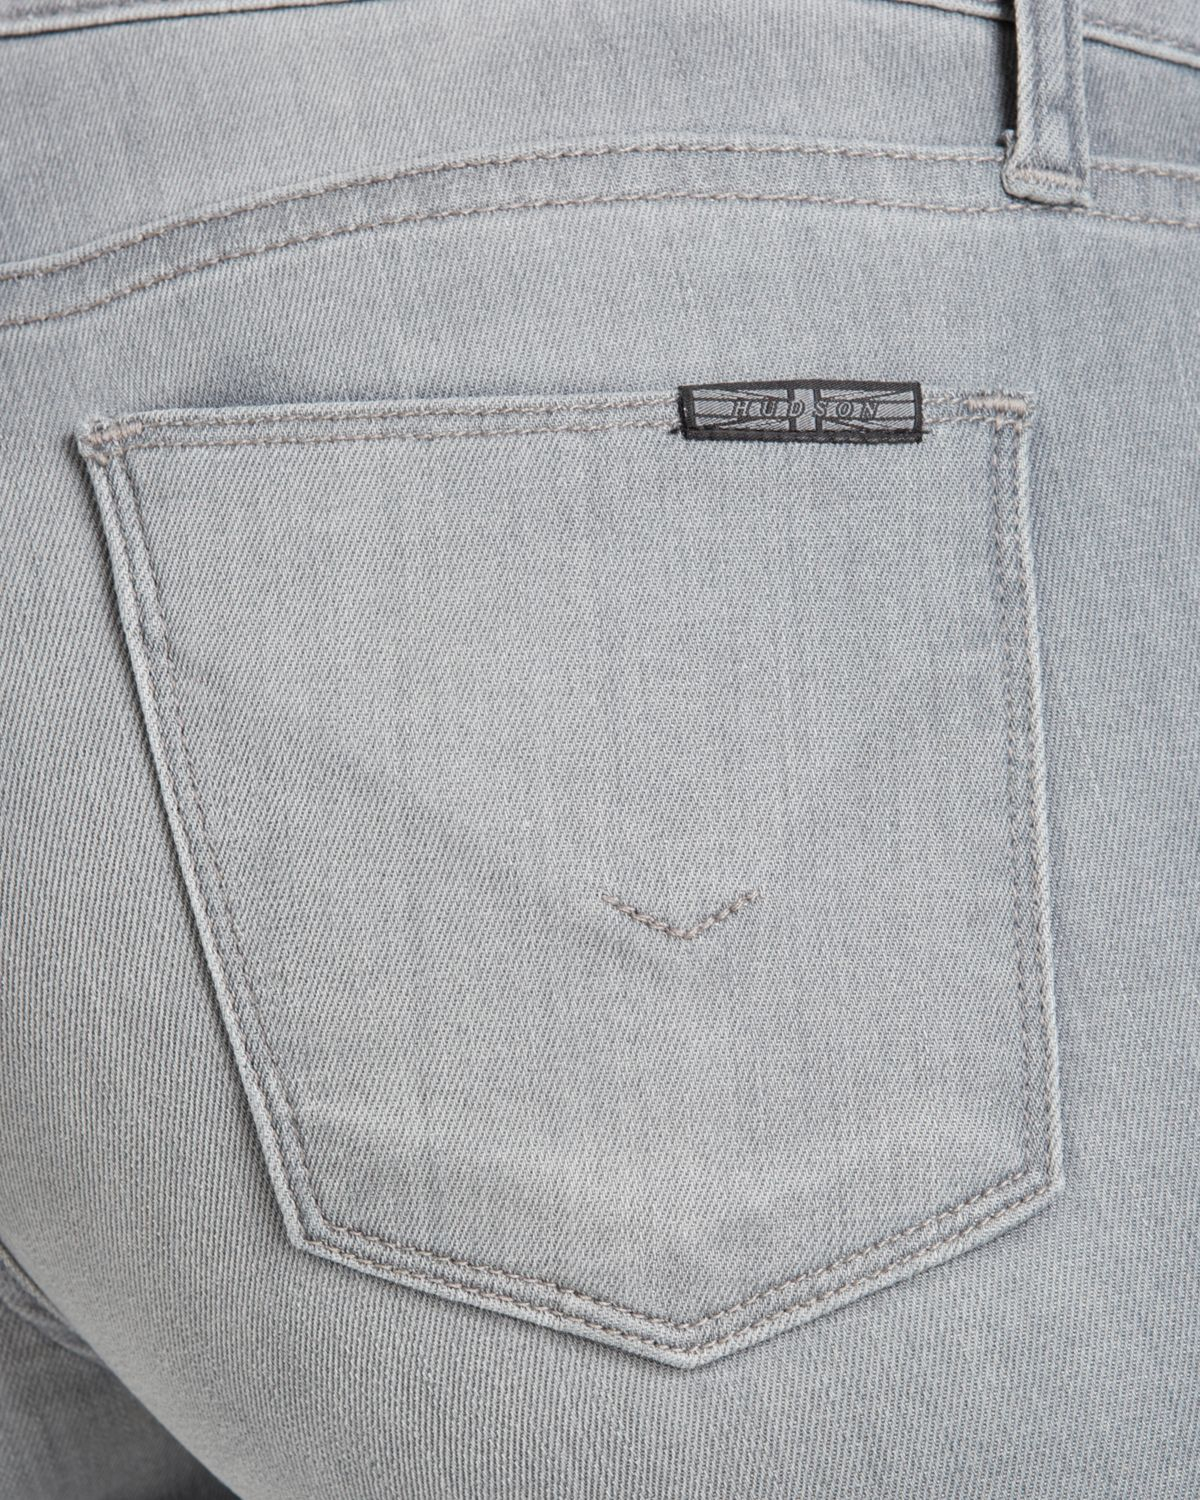 Hudson Jeans Jeans - Spark Skinny Zip In Puritan in Gray - Lyst